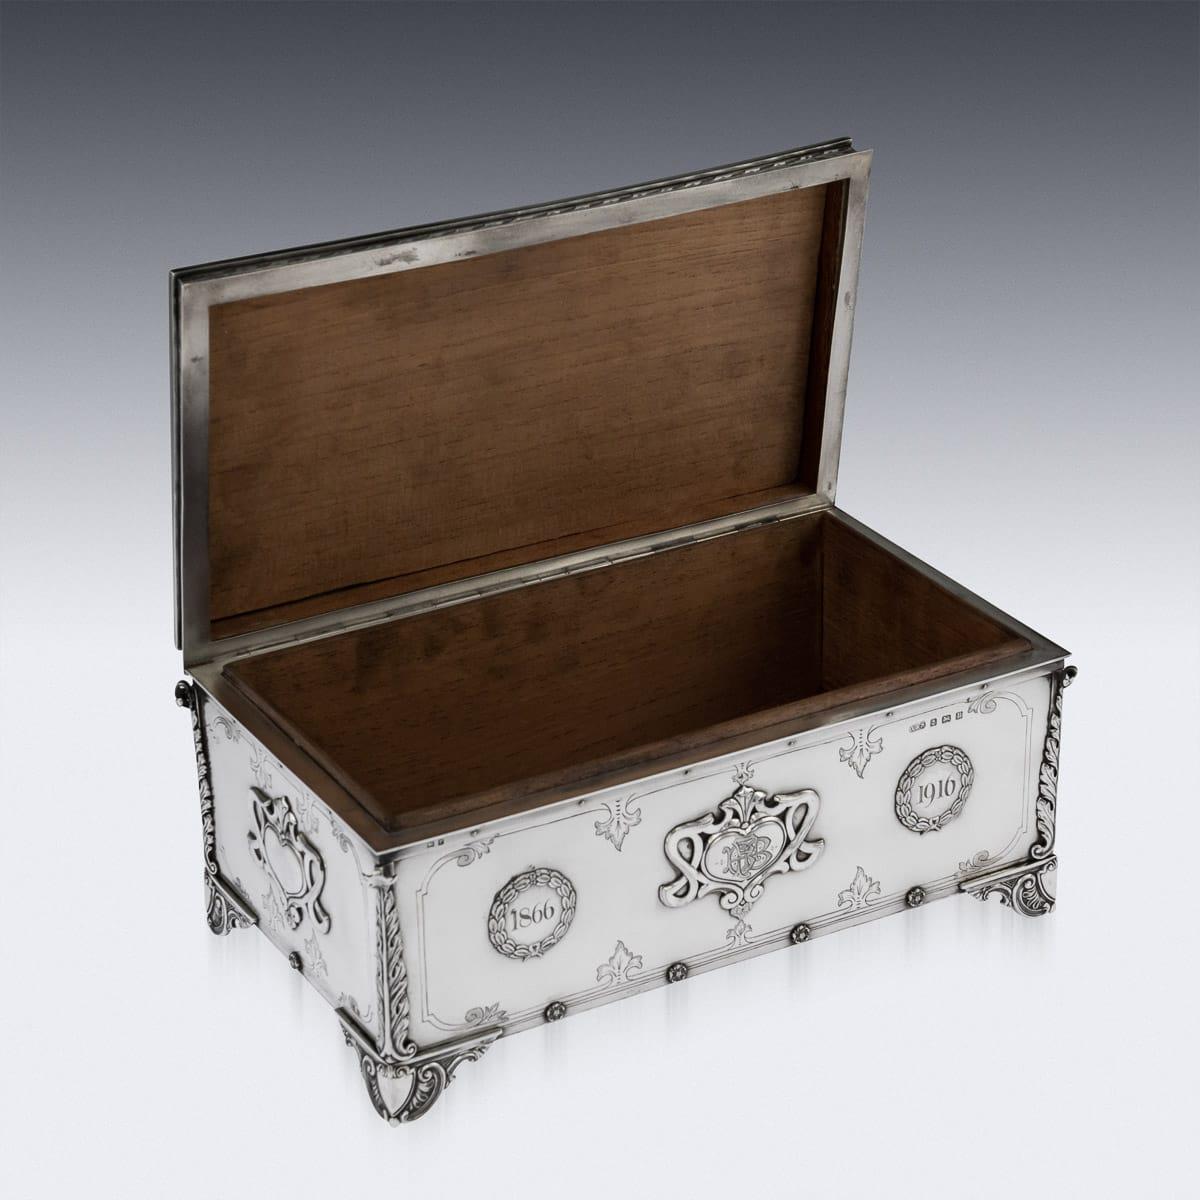 20th Century English Art Nouveau Solid Silver Presentation Cigar Box, circa 1916 For Sale 3